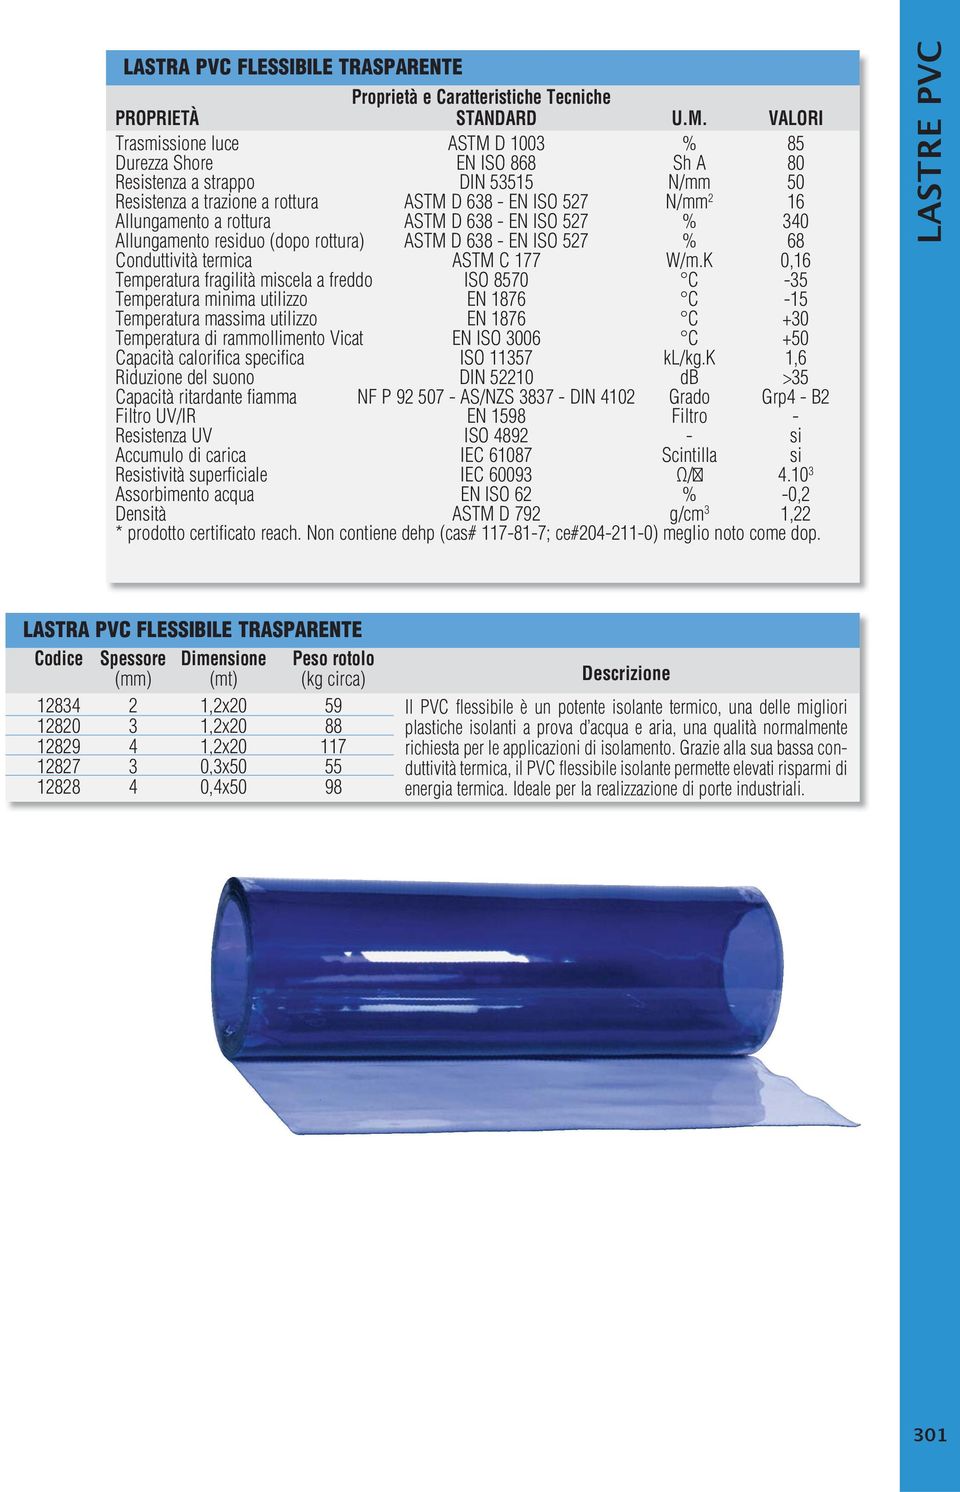 rottura ASTM D 638 - EN ISO 527 % 340 Allungamento residuo (dopo rottura) ASTM D 638 - EN ISO 527 % 68 Conduttività termica ASTM C 177 W/m.